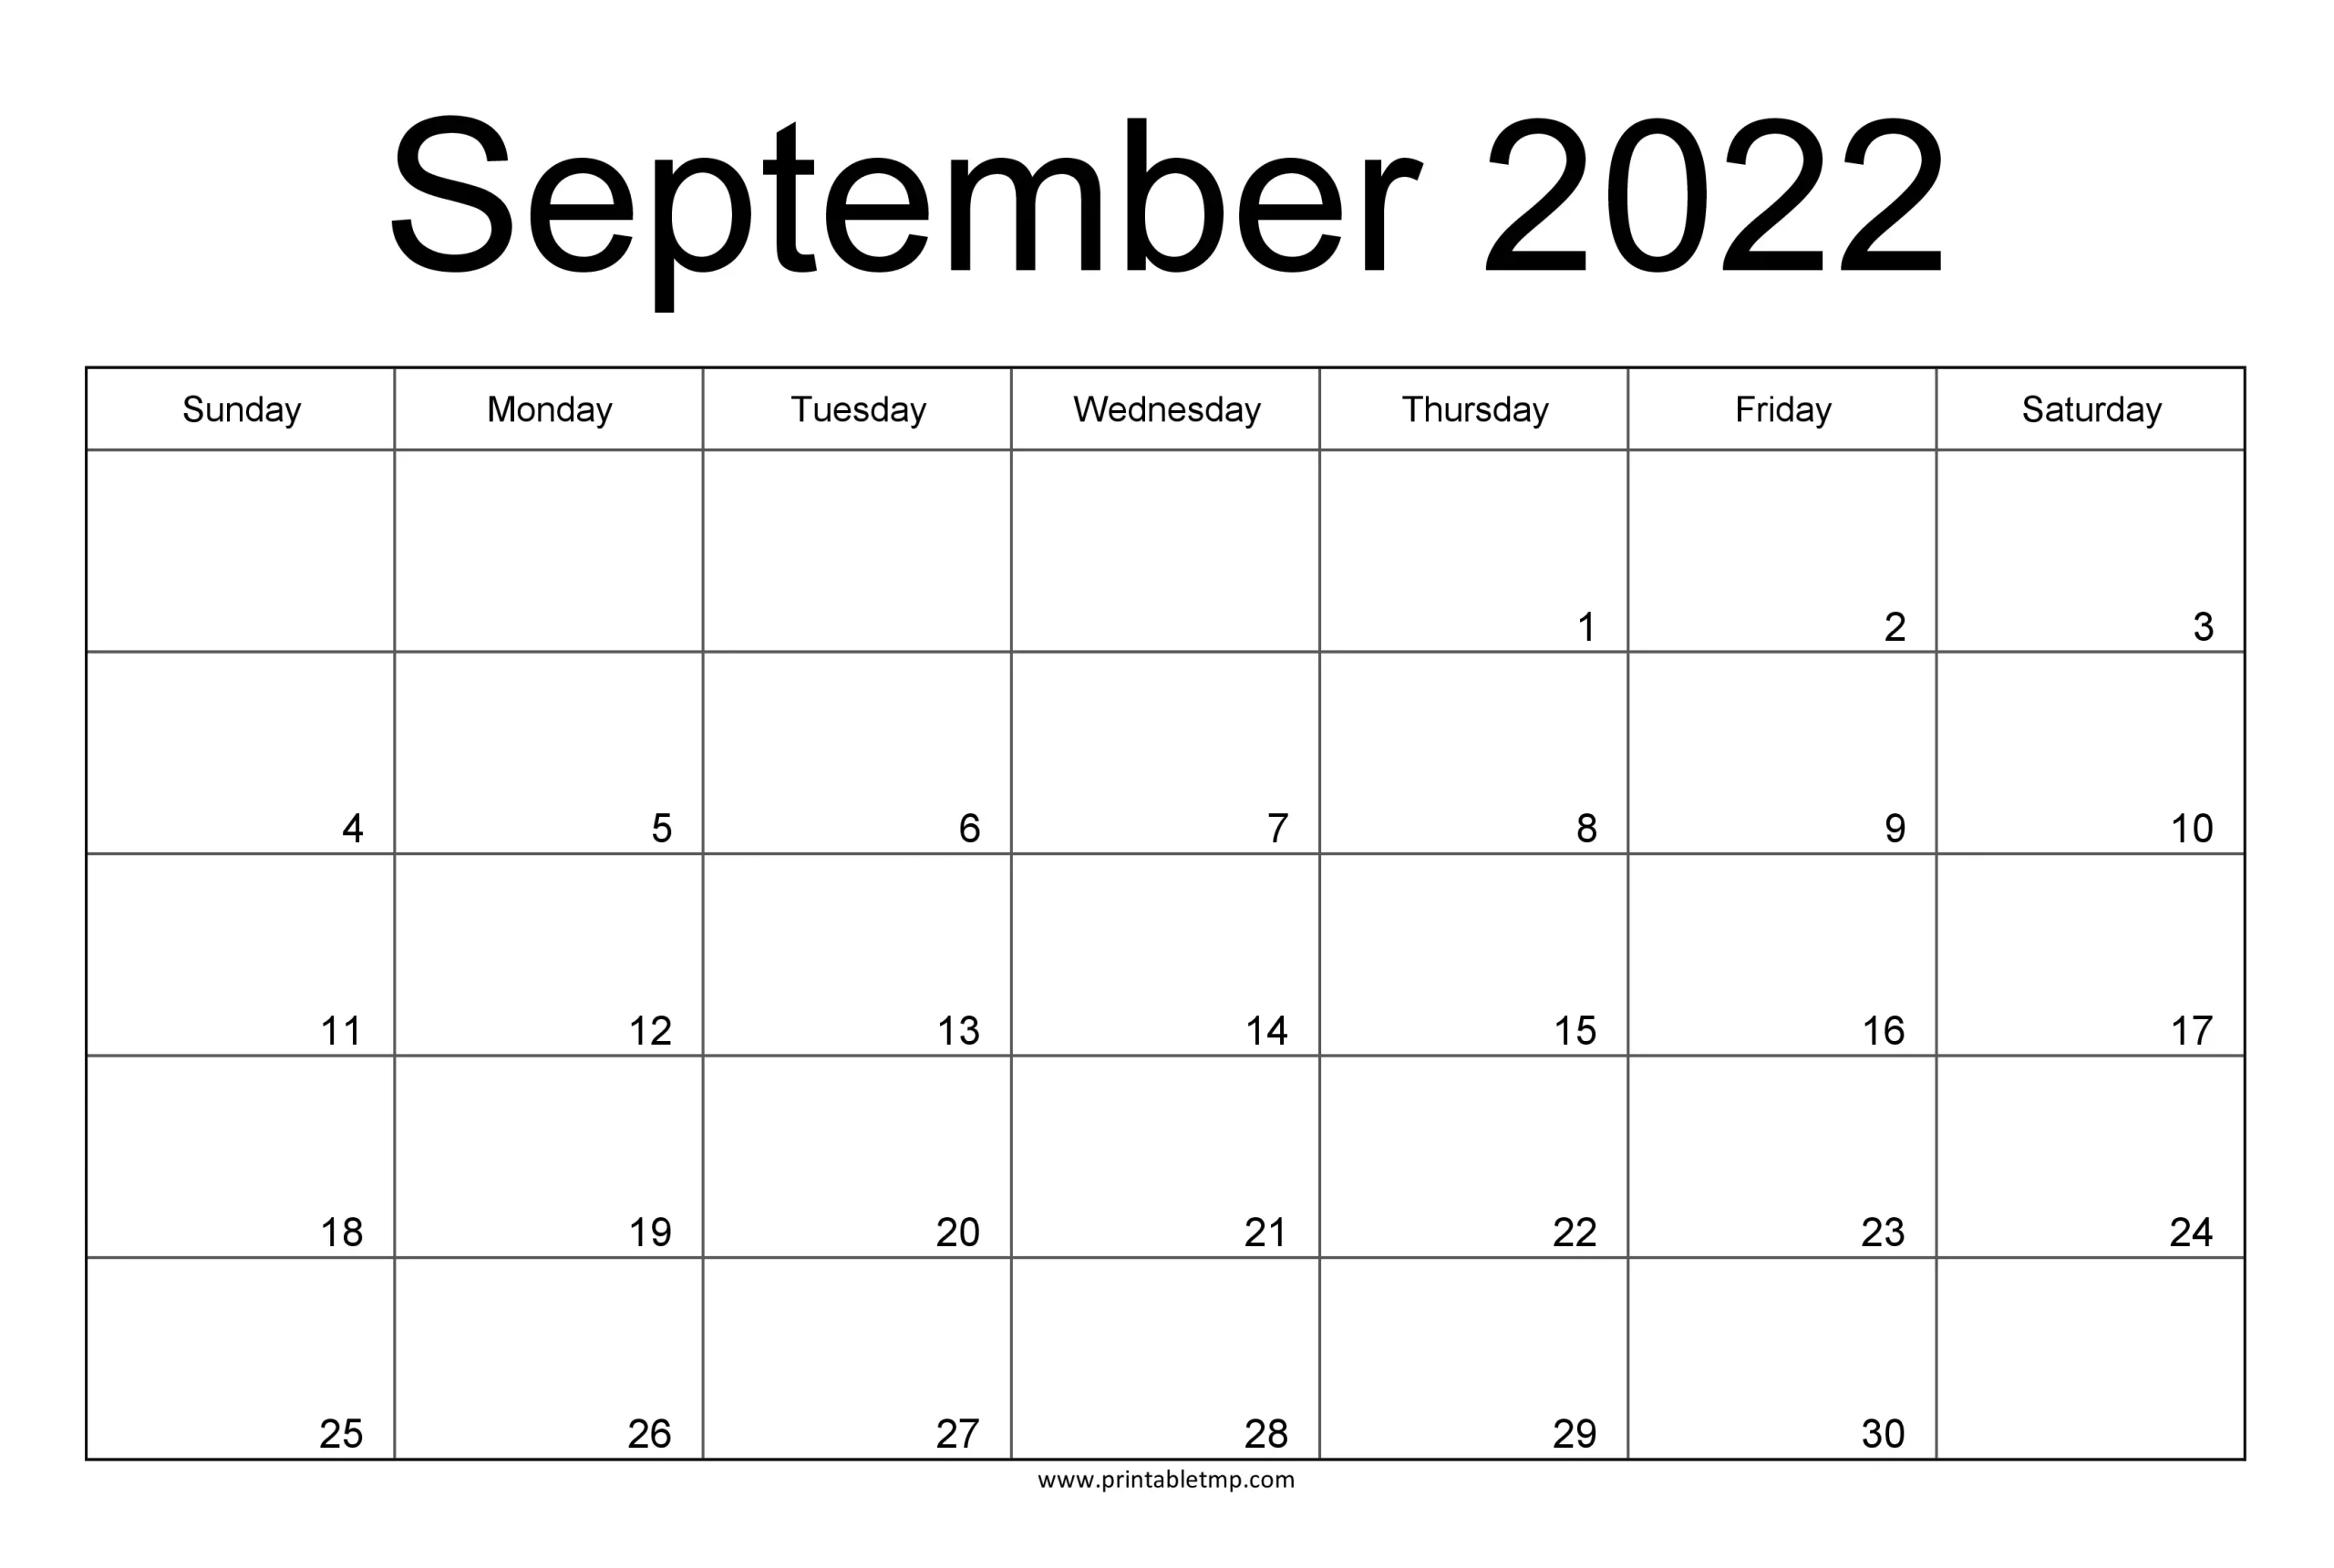 September 2022 Calendar Printable Template - Black and White